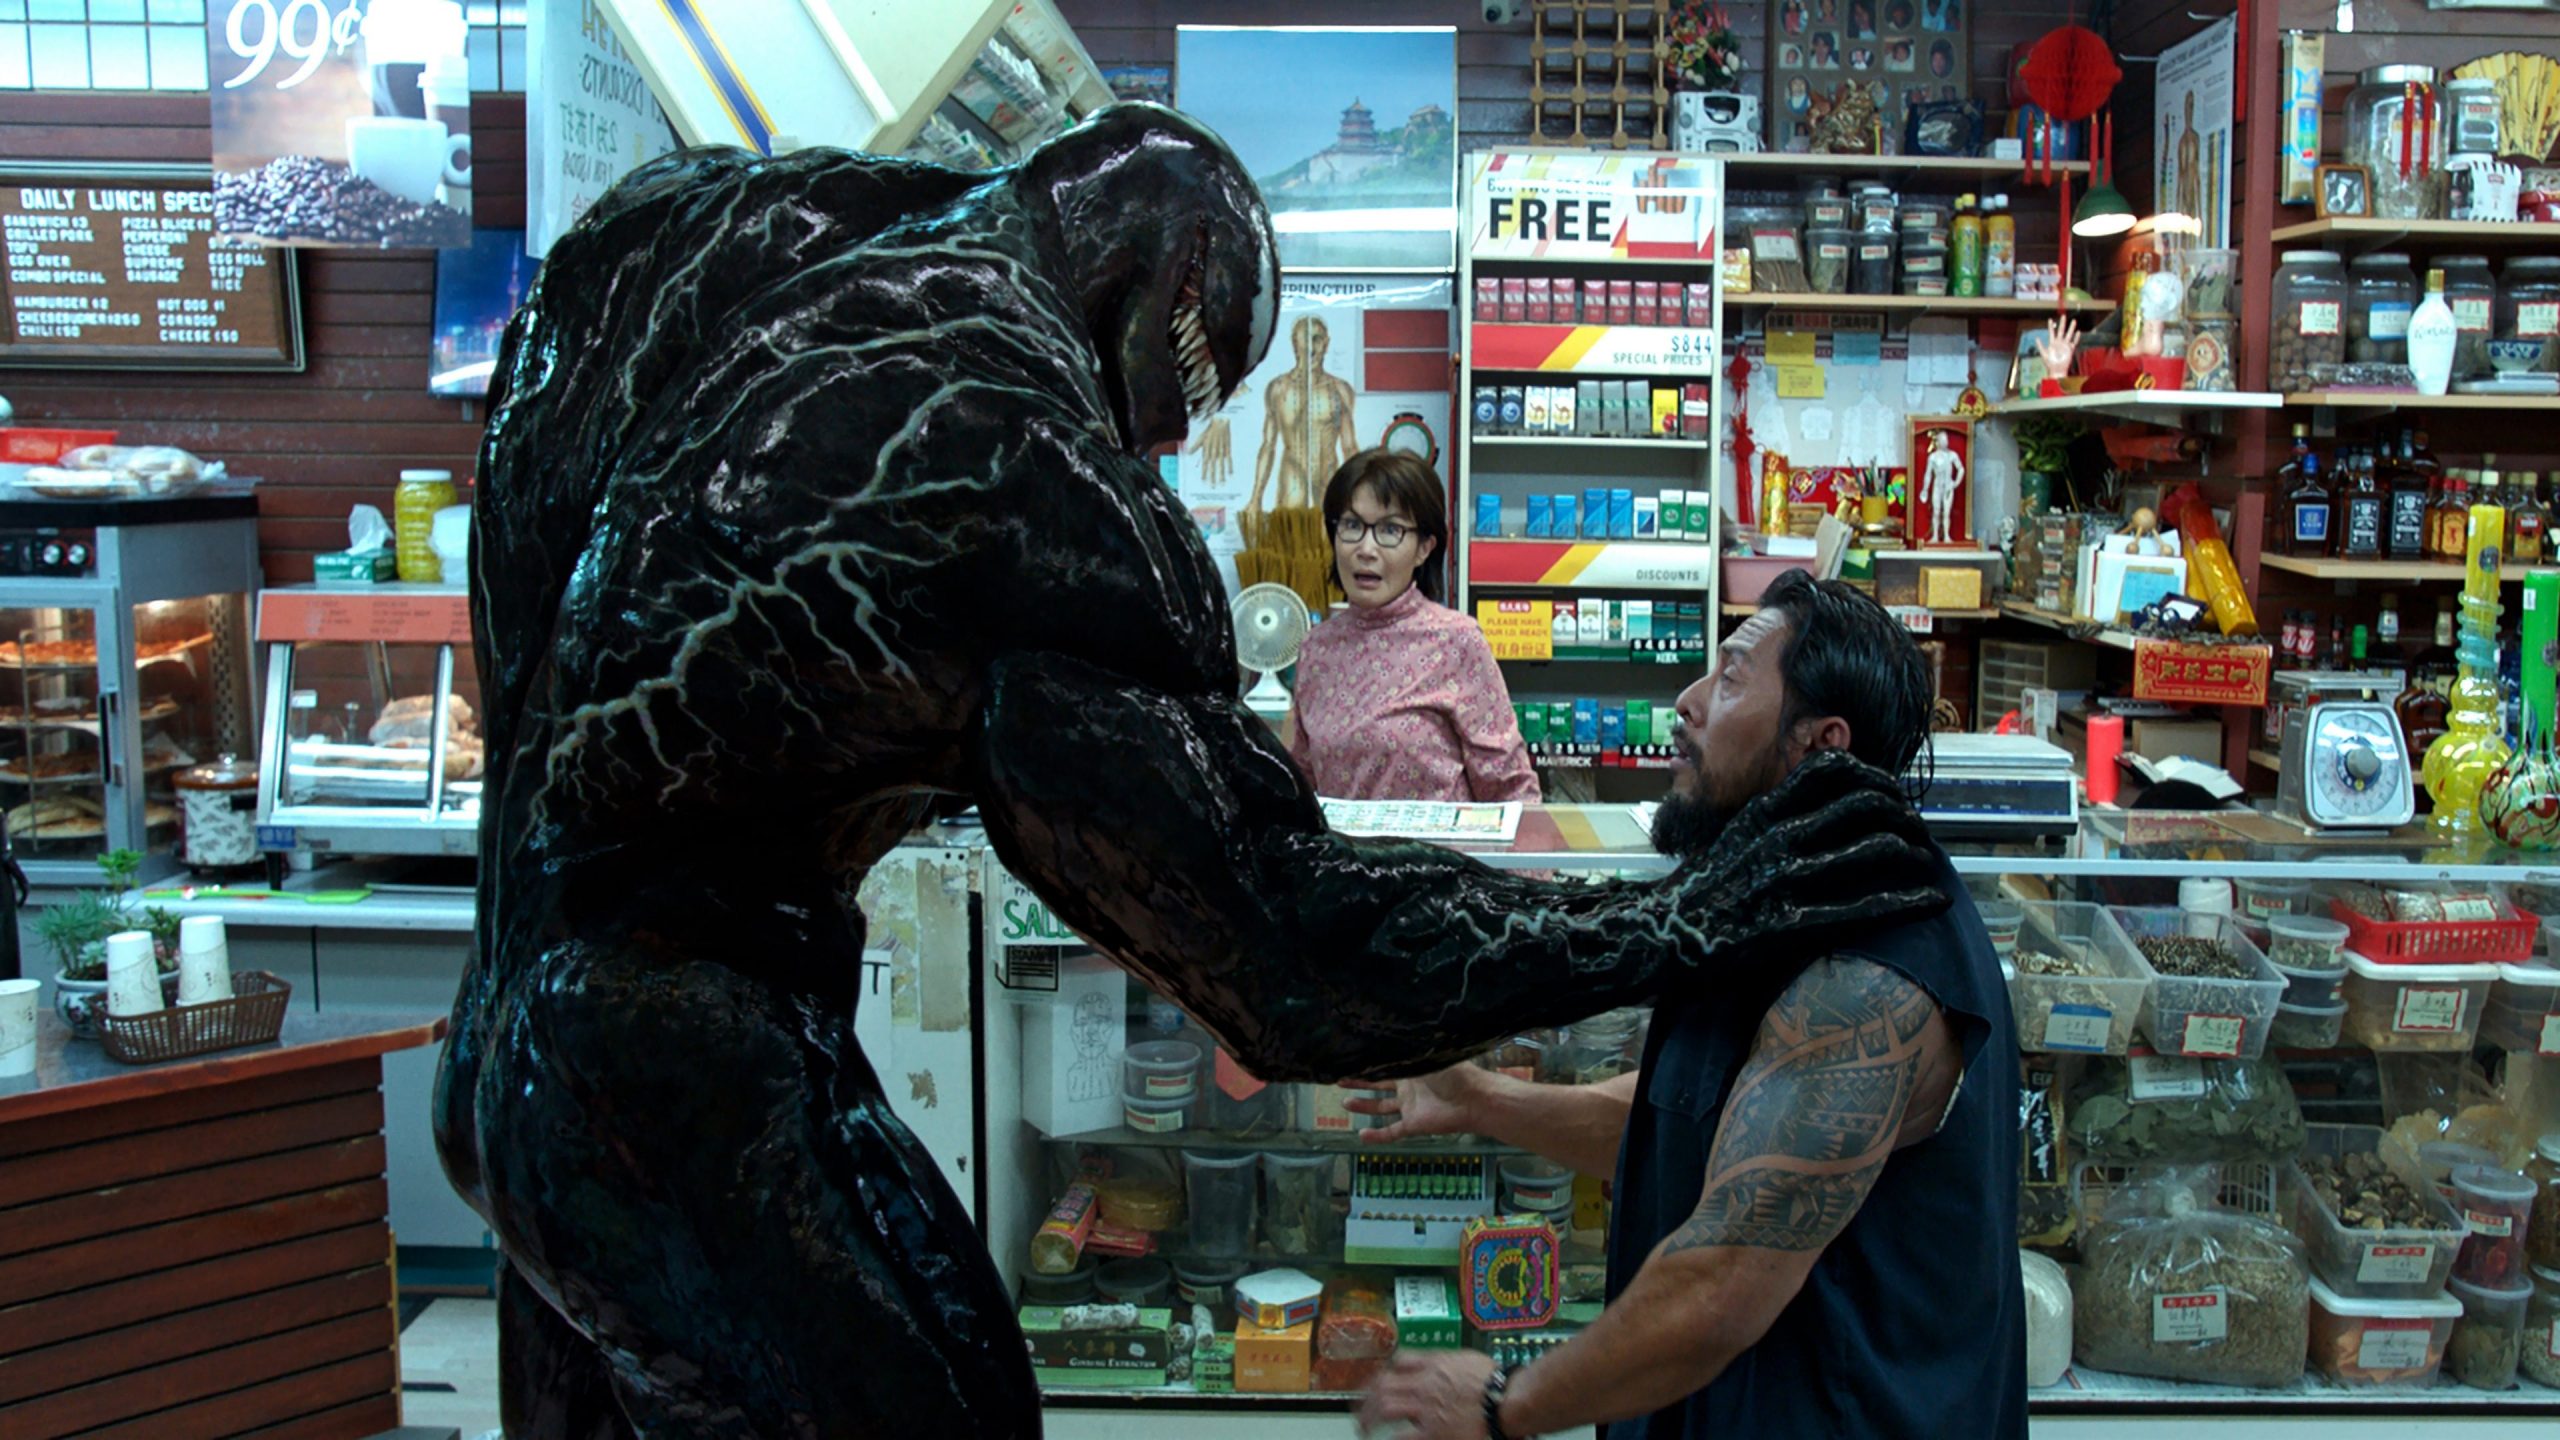 Image from the movie "Venom"